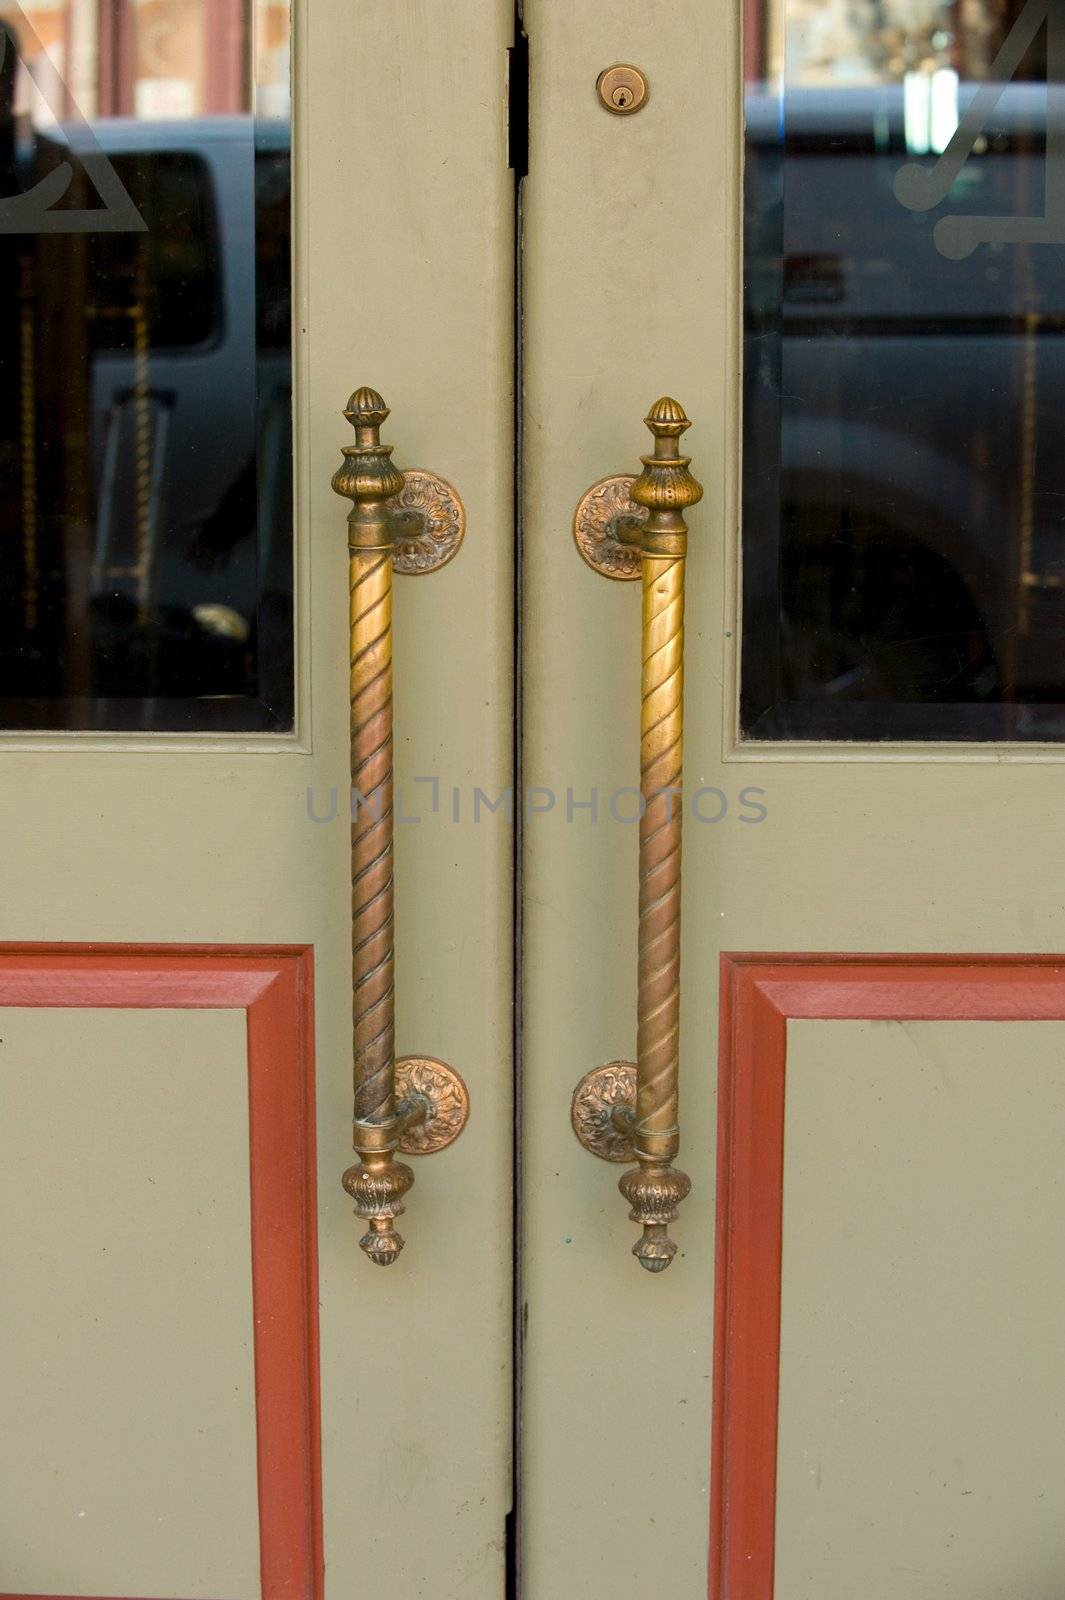 An image of double doors